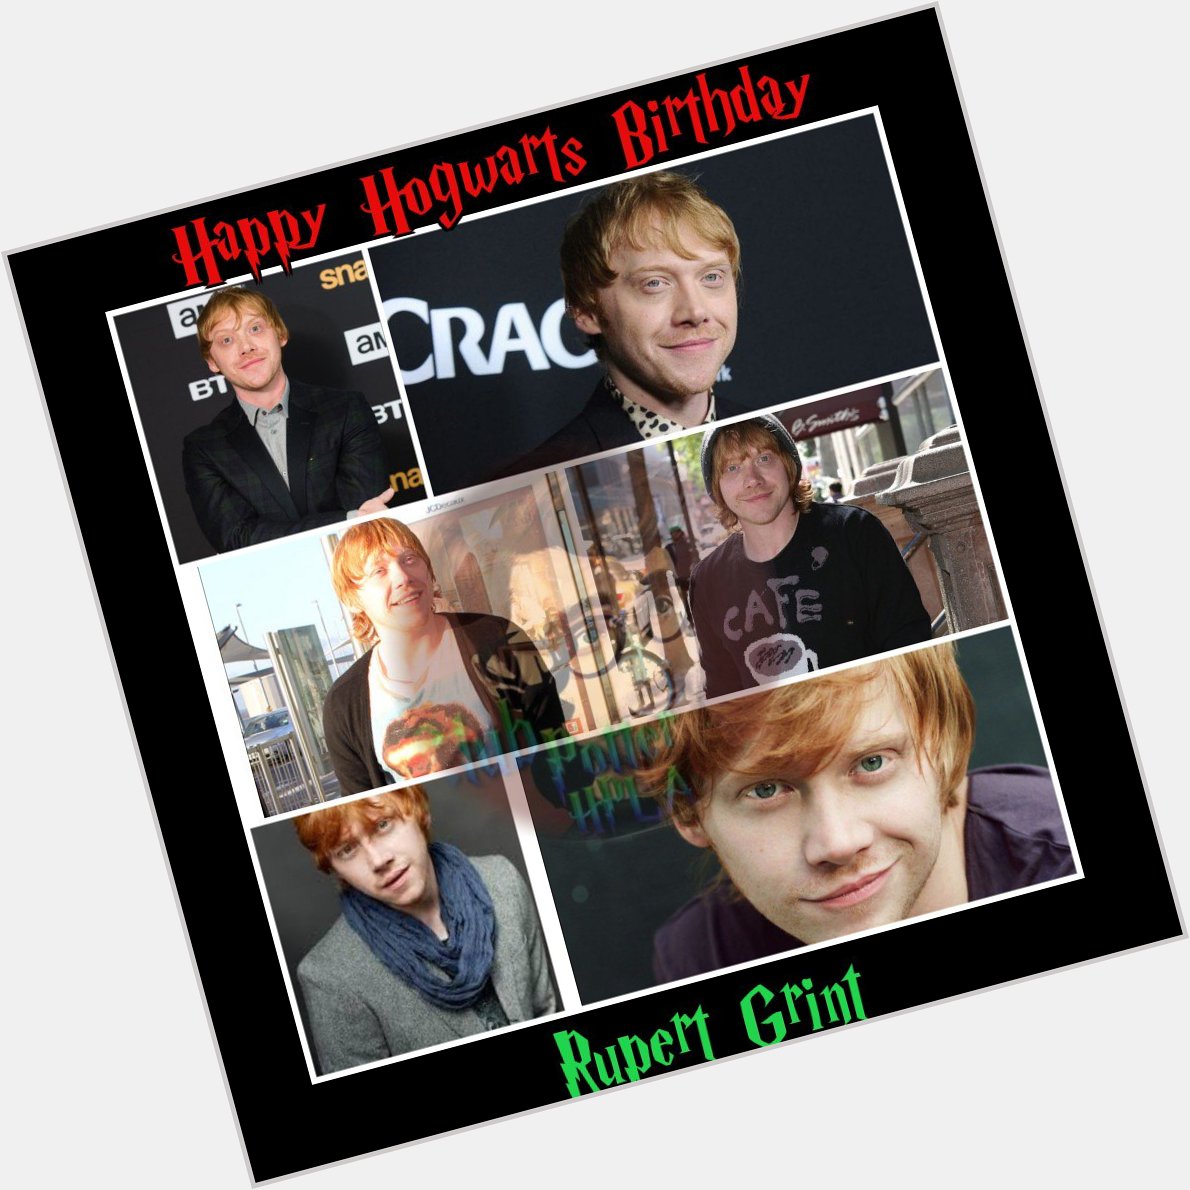 Happy Hogwarts Birthday Rupert Grint   